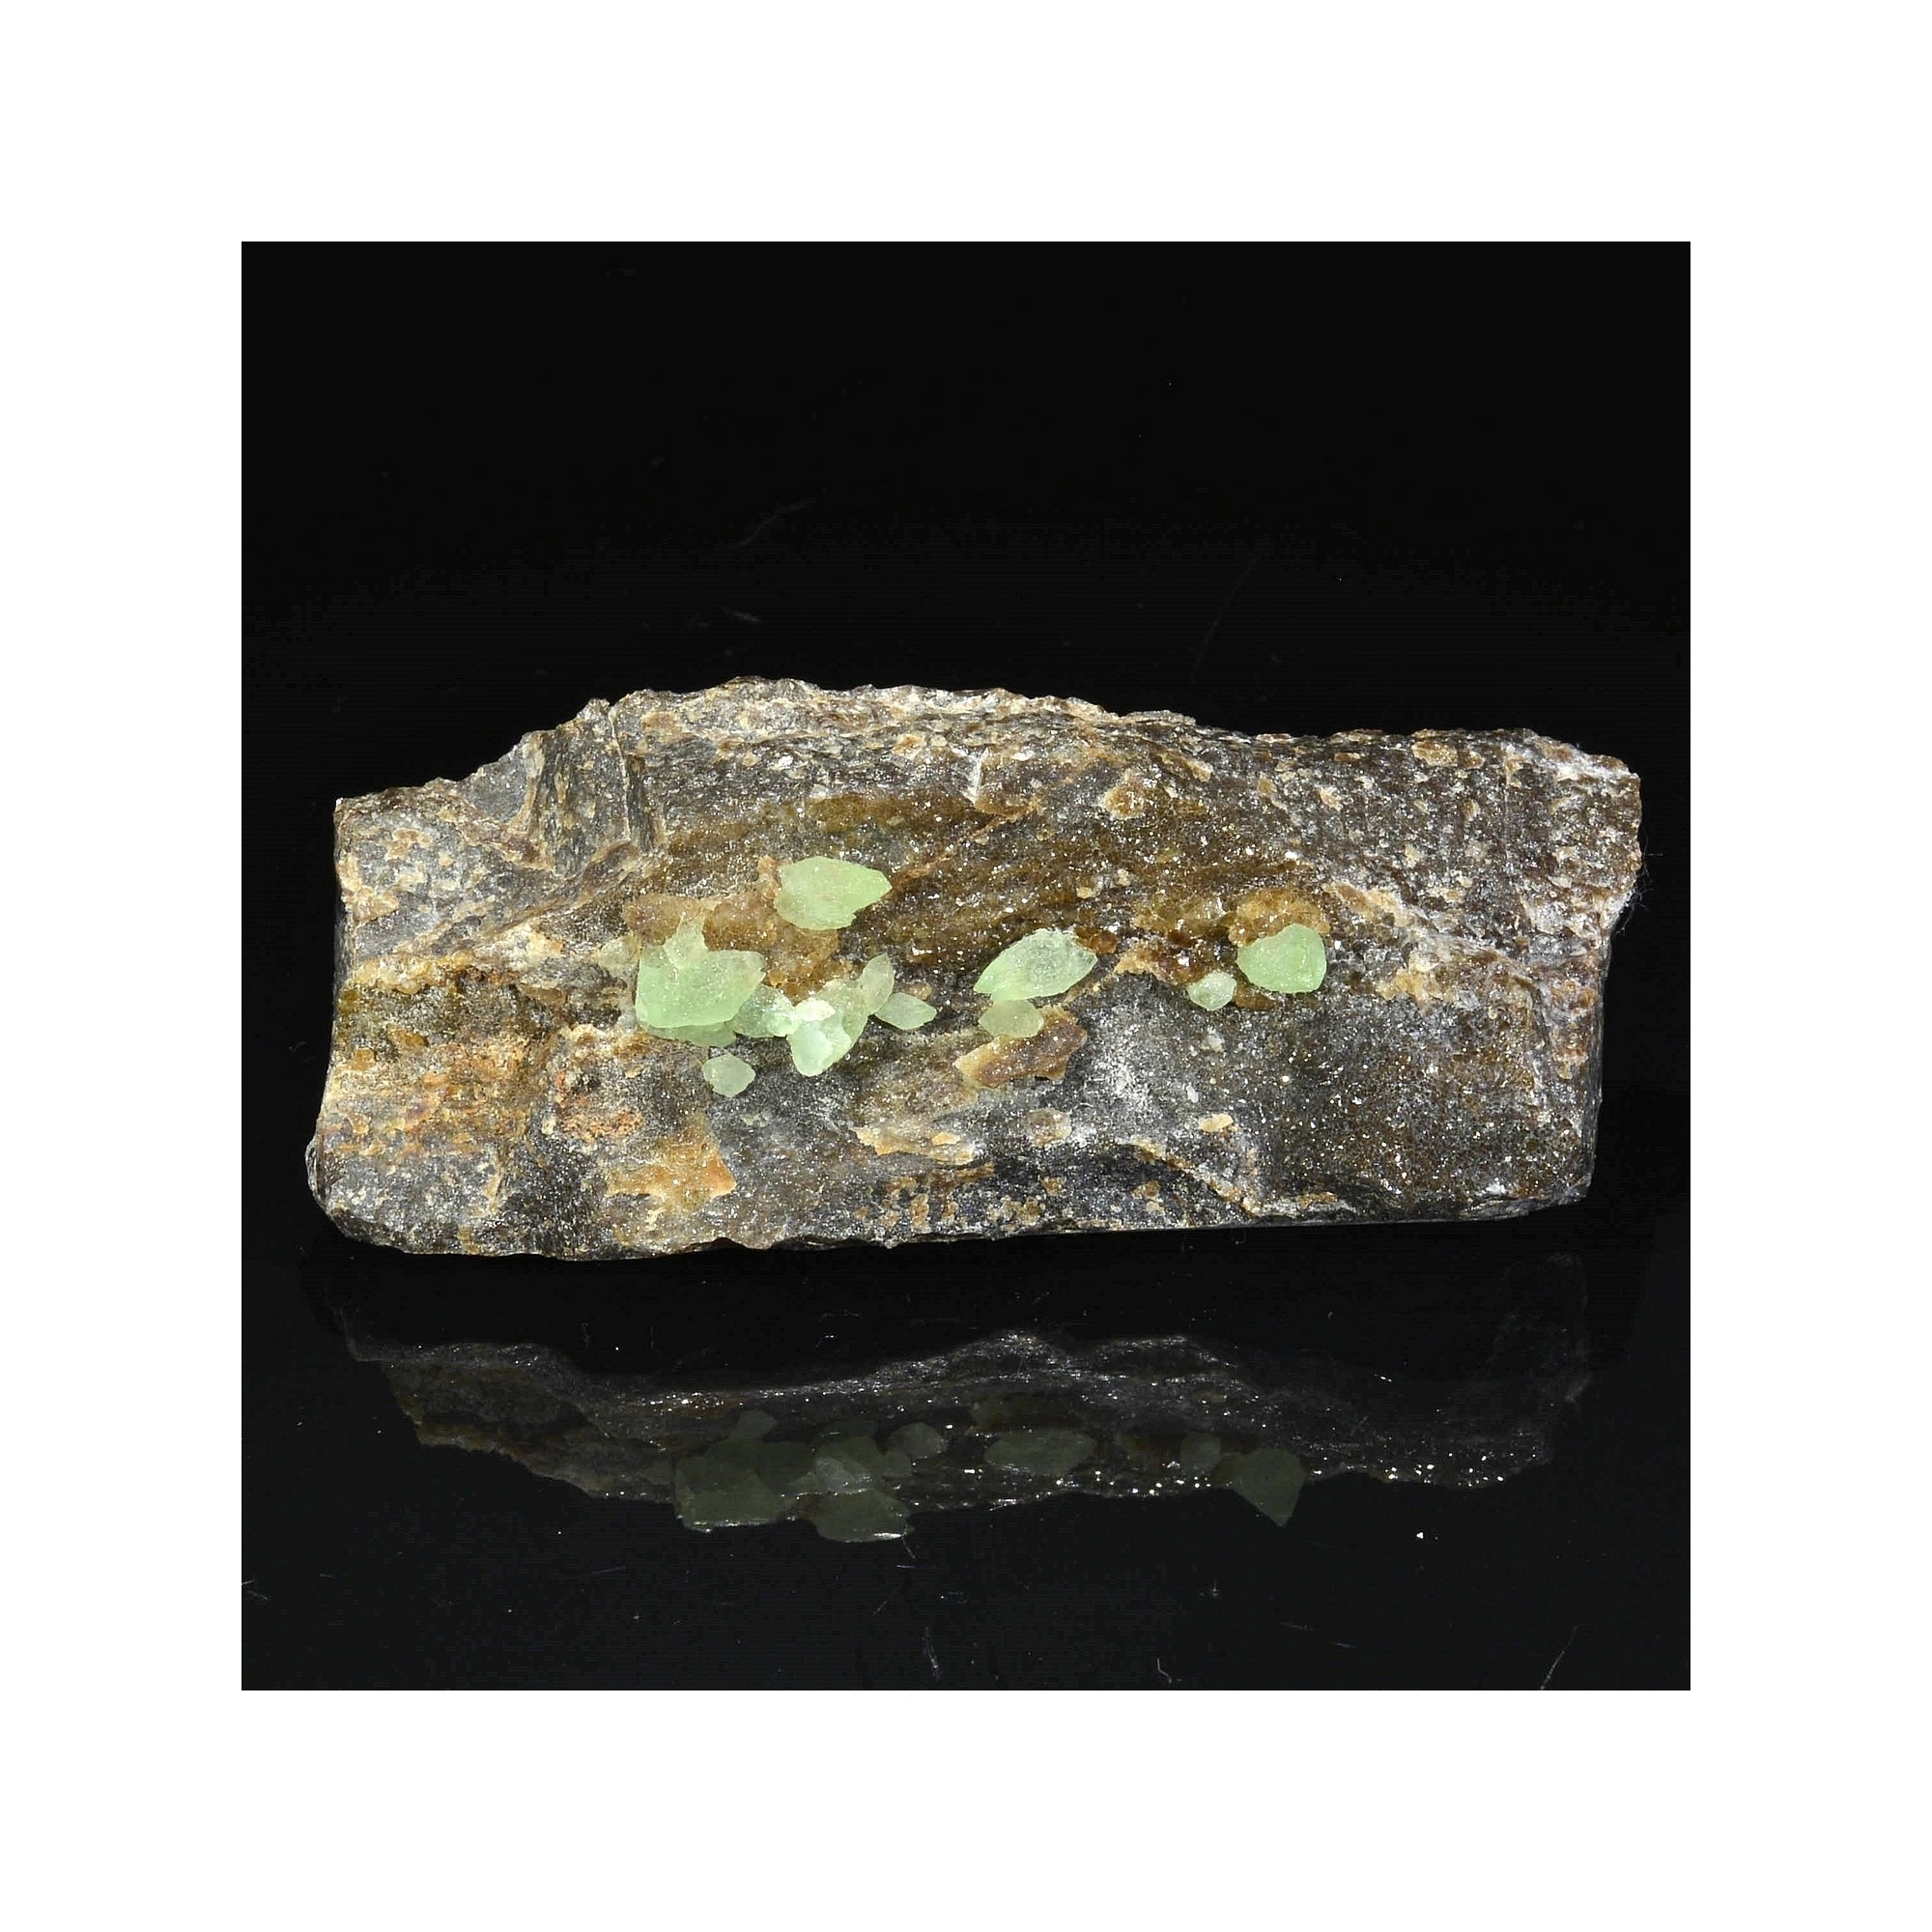 Rare ! Green kiwi calcite - Garfield Co., Utah, USA